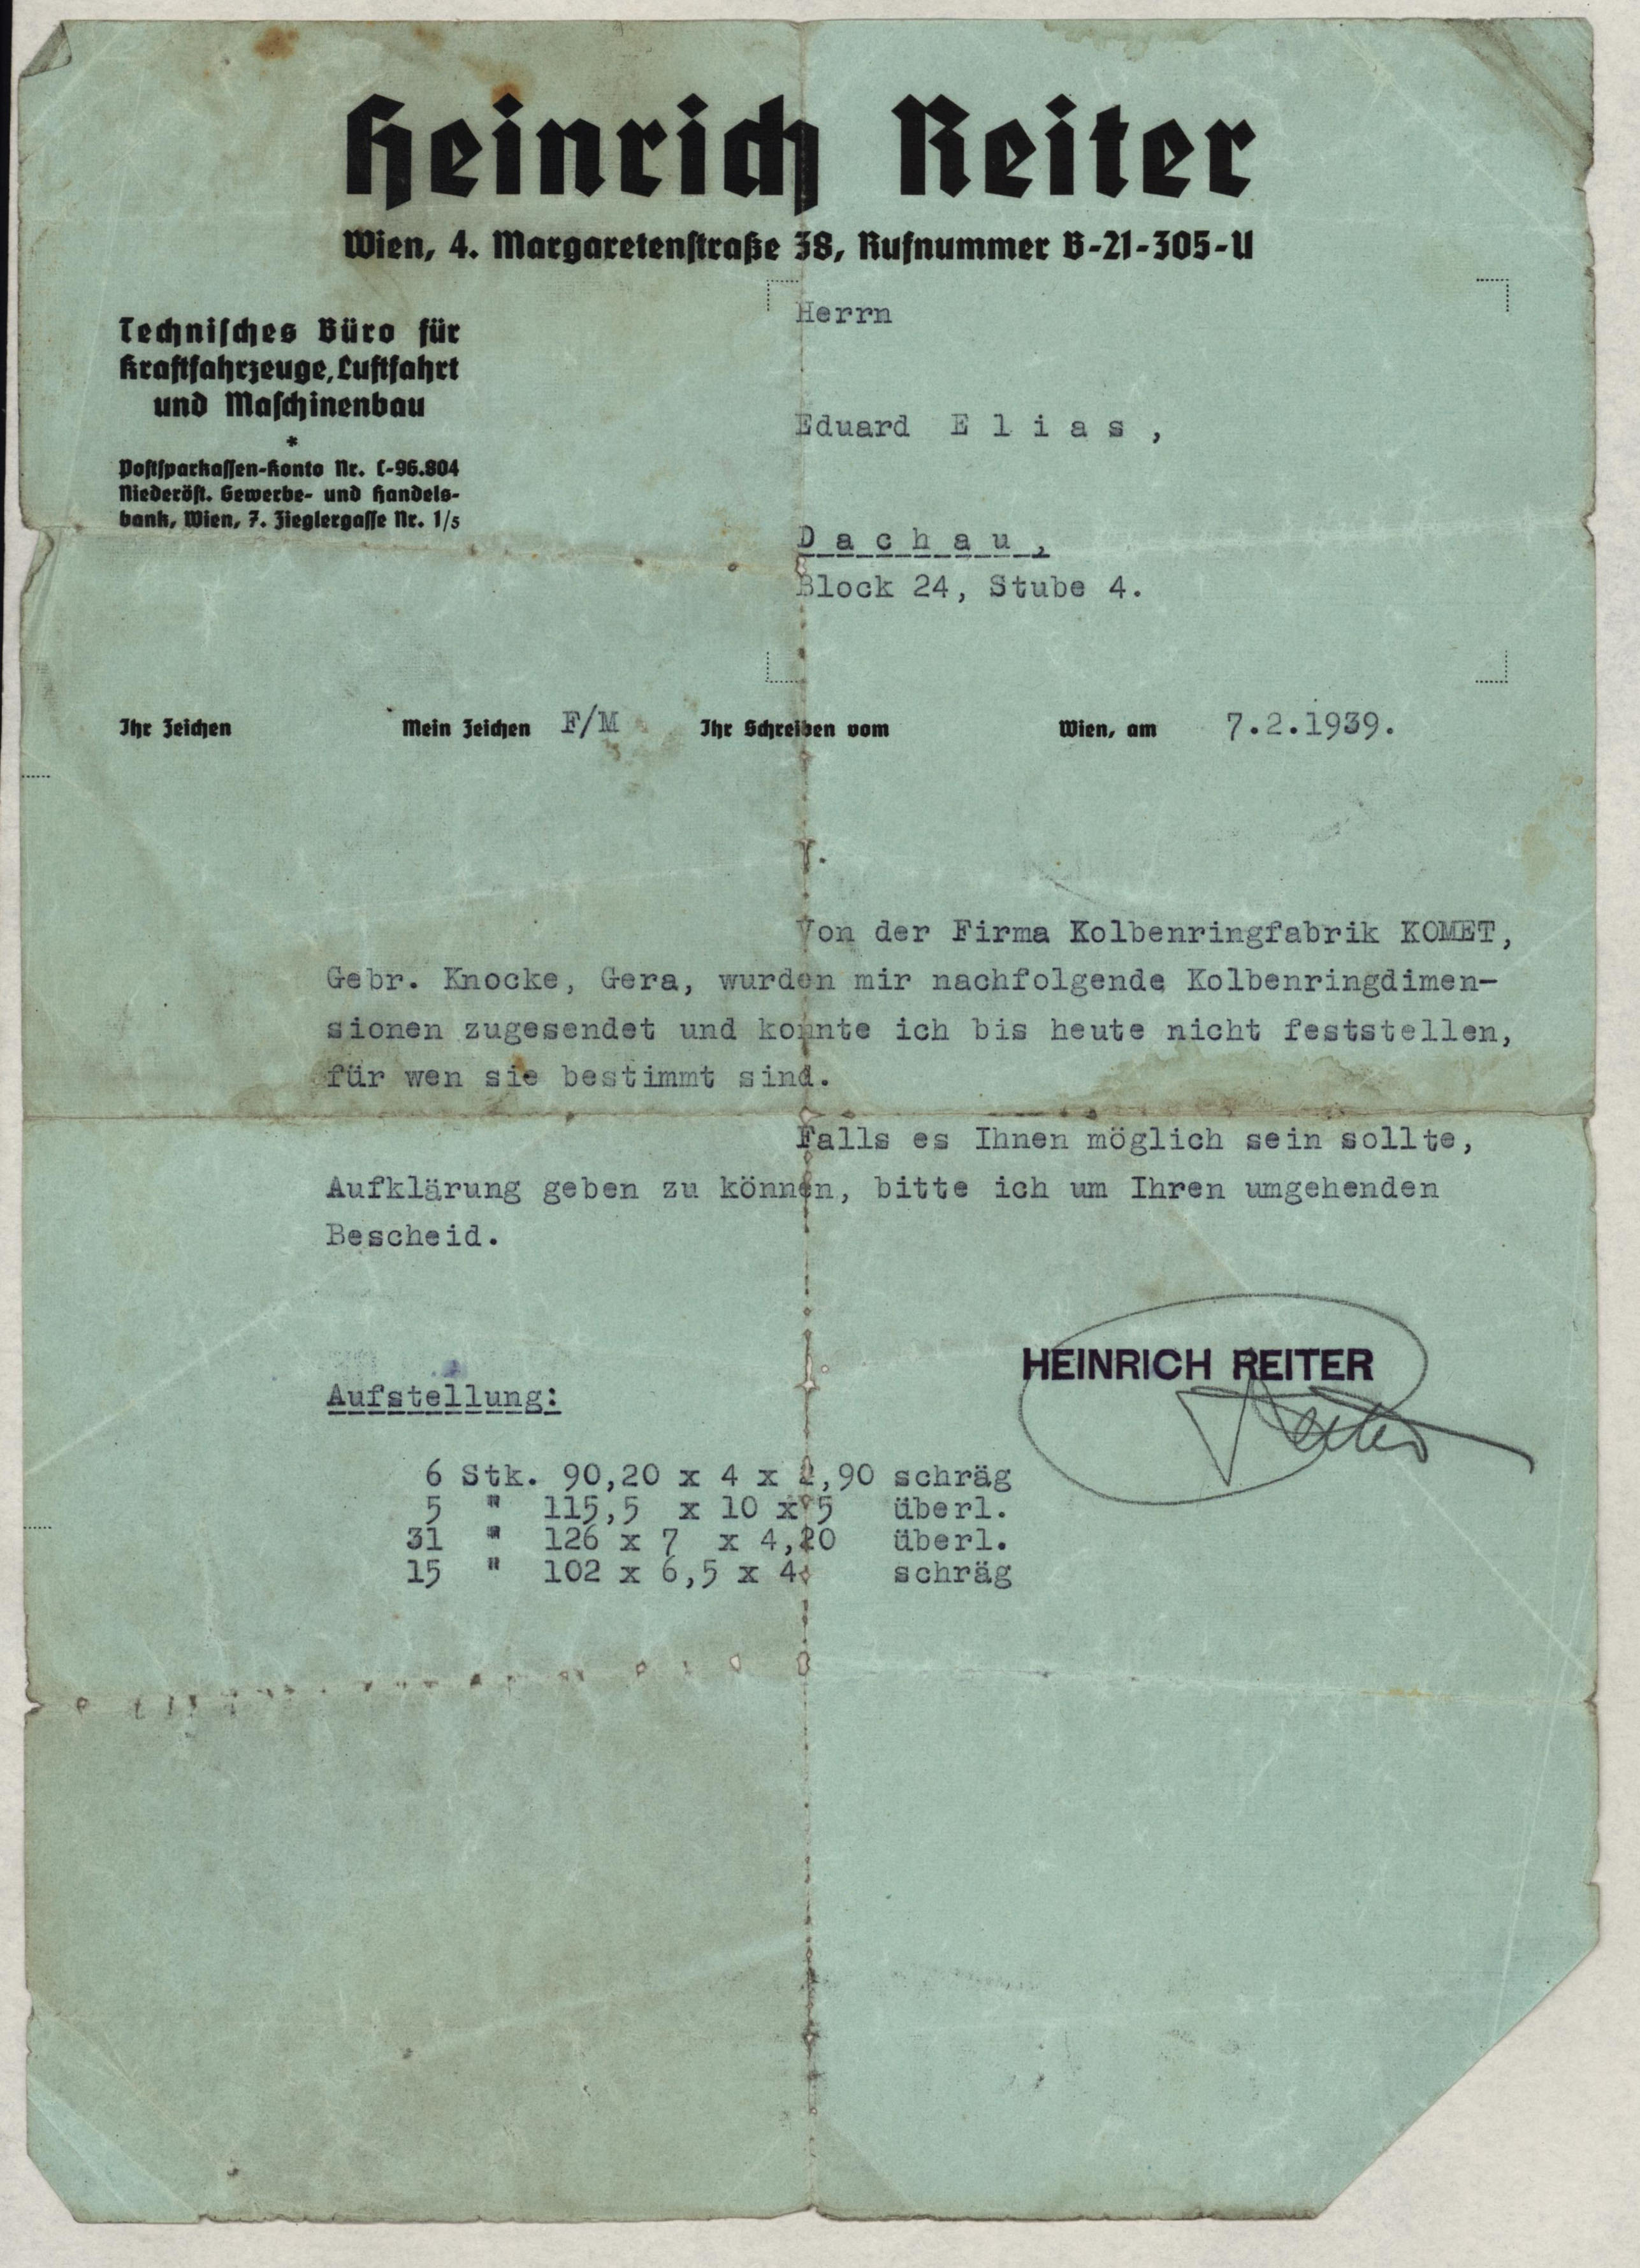 Richborough camp, Eduard Elias, letter to Dachau, 7 February 1939